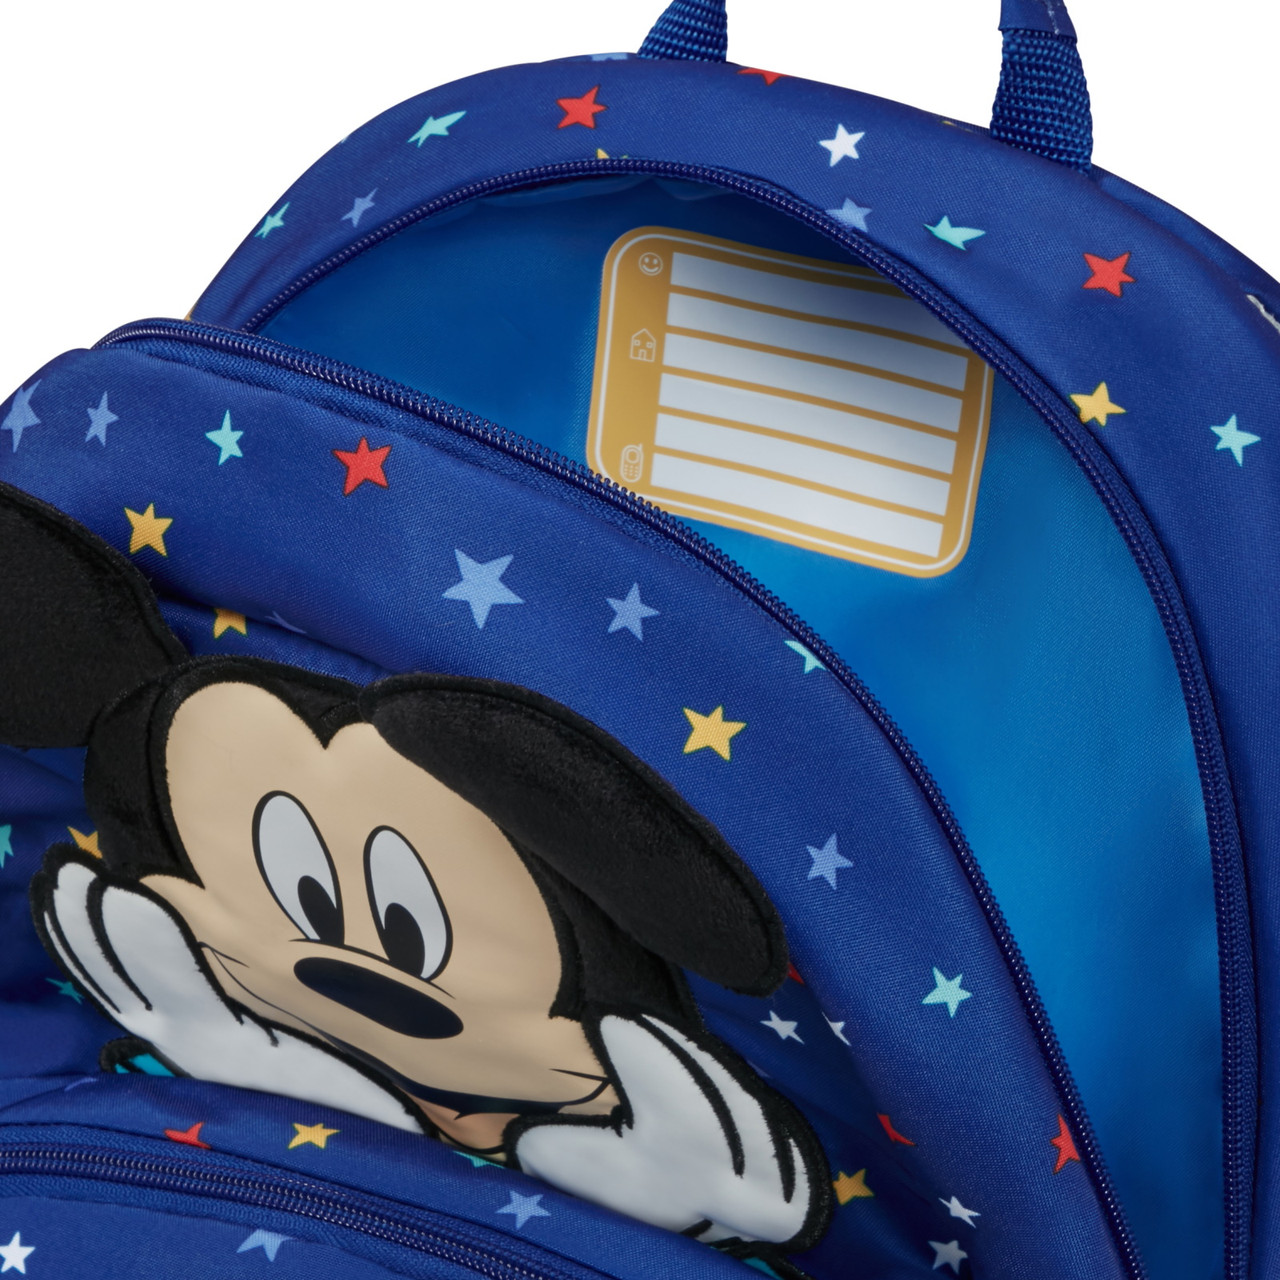 Disney at 2.0 Luggage Mickey Stars Backpack Superstore Ultimate S+ Samsonite